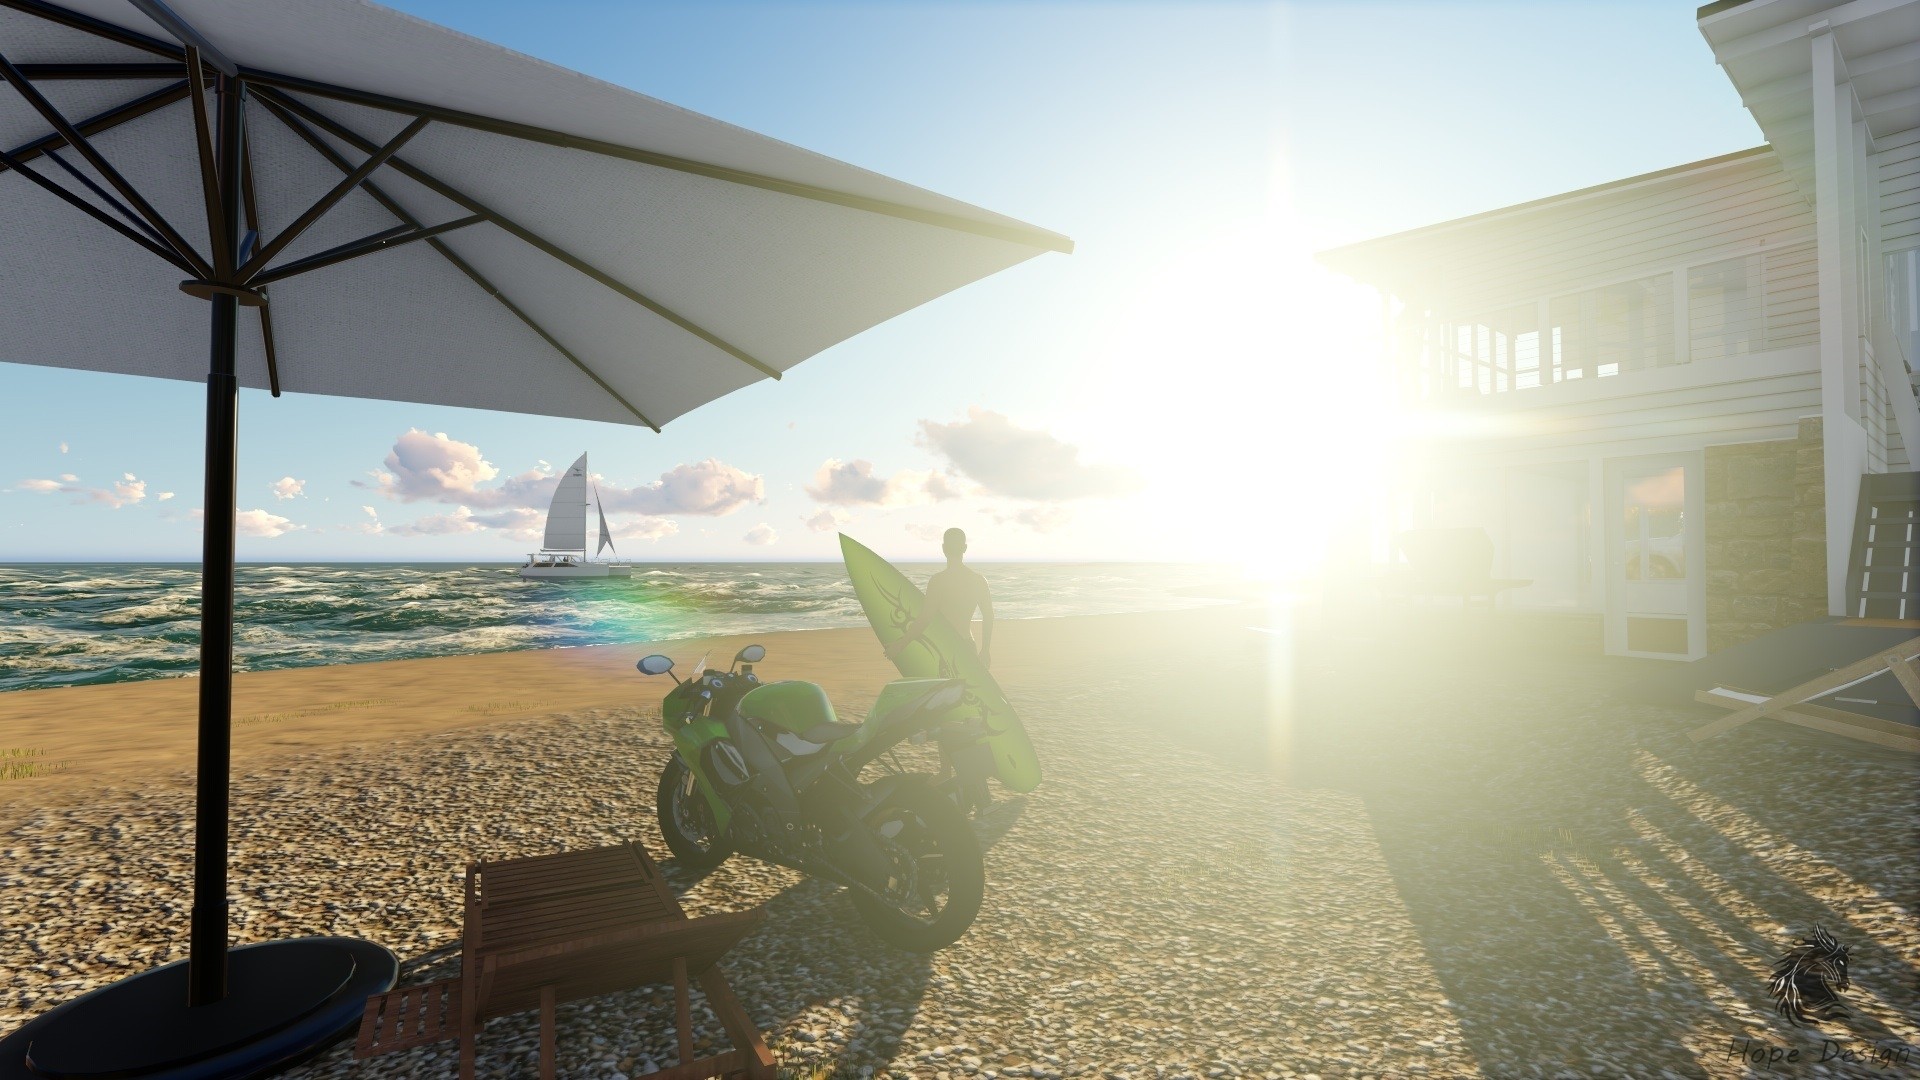 General 1920x1080 sunlight beach motorcycle Green Motorcycles men sky men outdoors vehicle